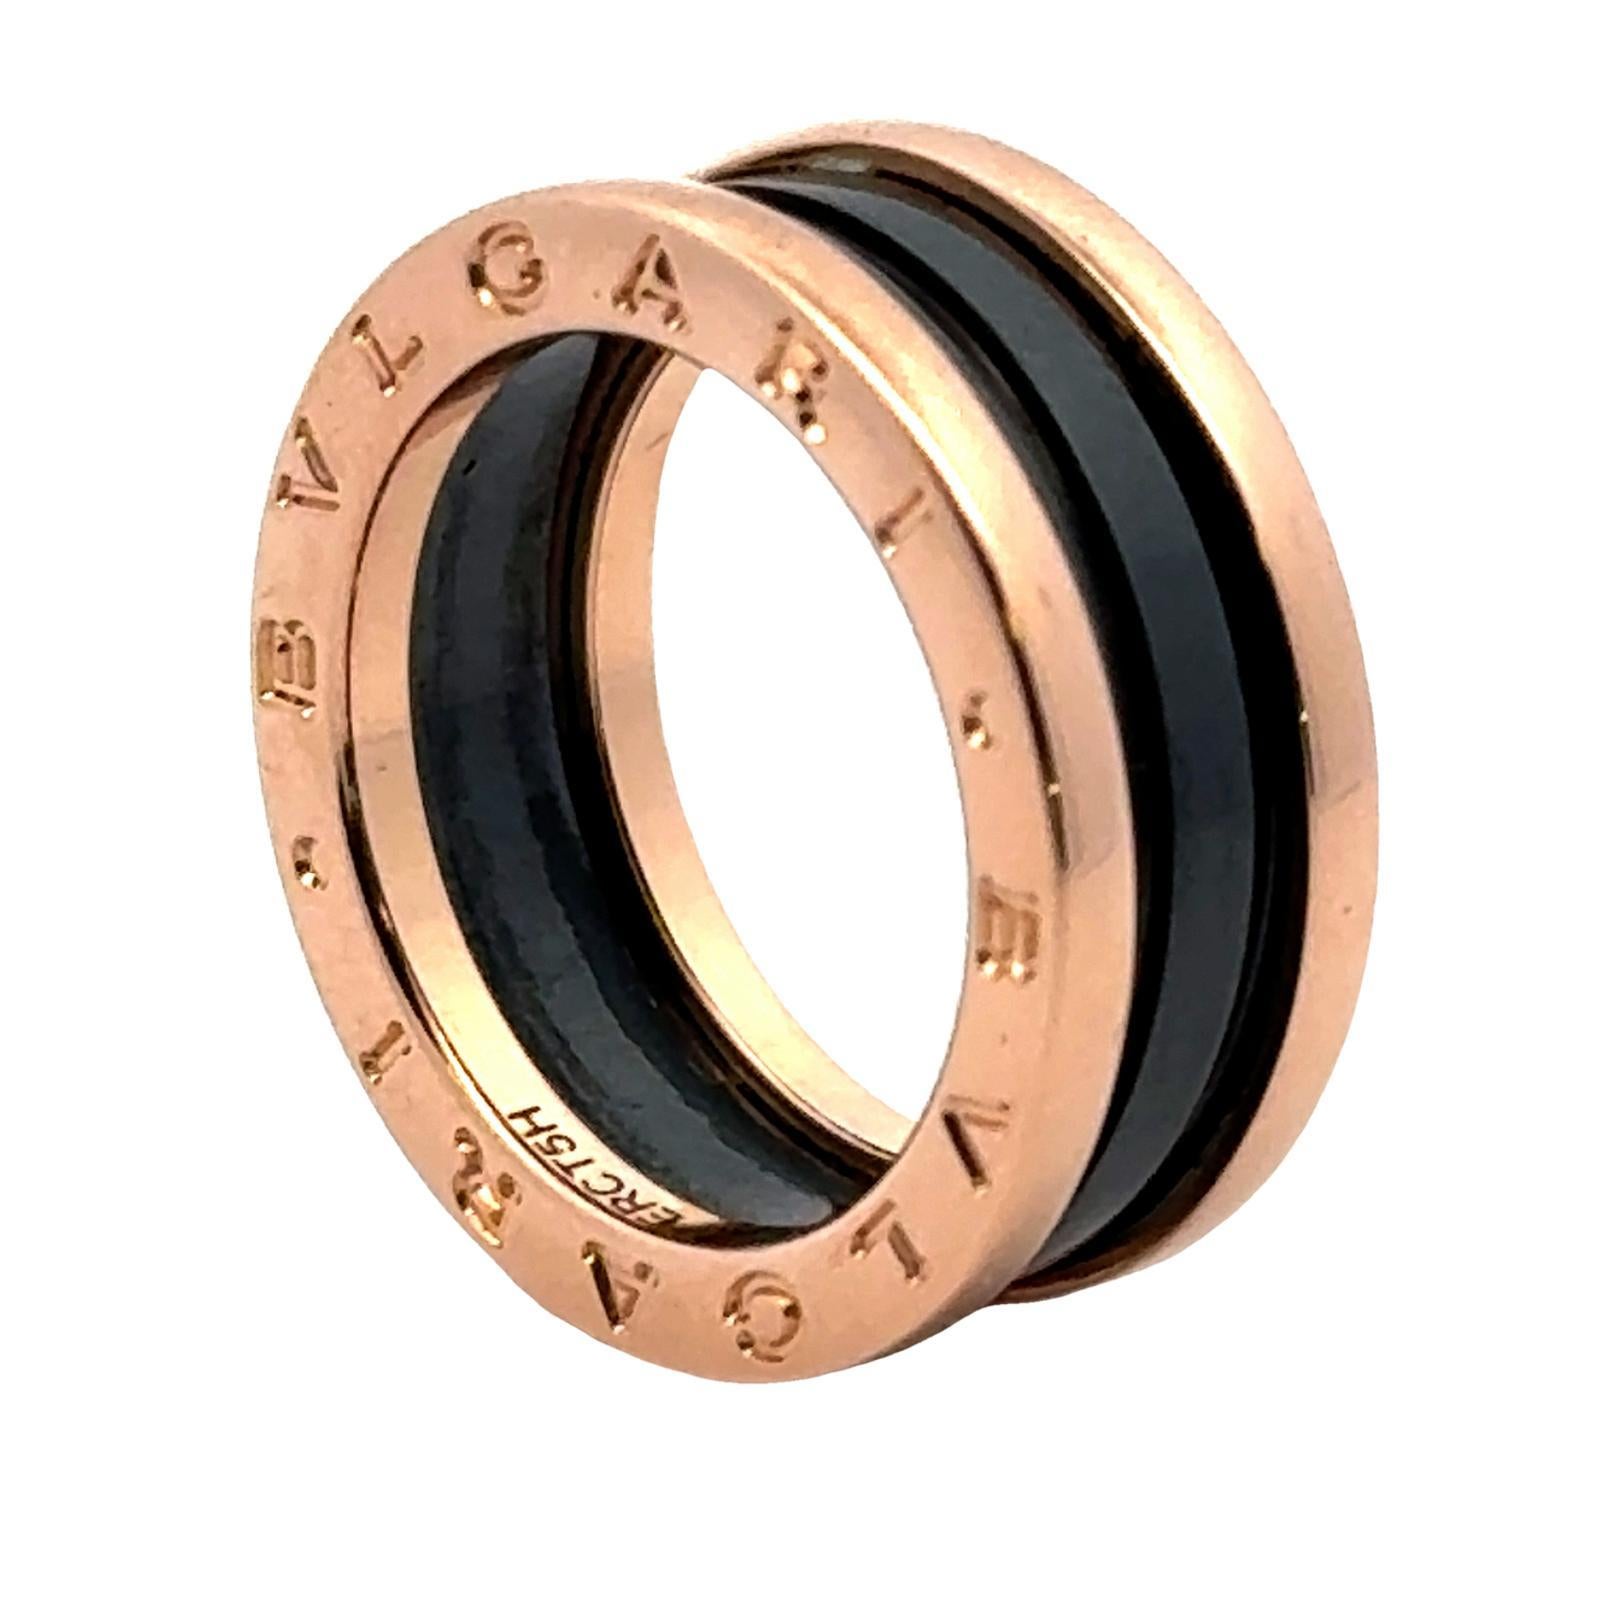 BVLGARI 18 Karat Rose Gold & Ceramic B-Zero Ring Size 53 ( US Size 6) In Excellent Condition For Sale In Boca Raton, FL